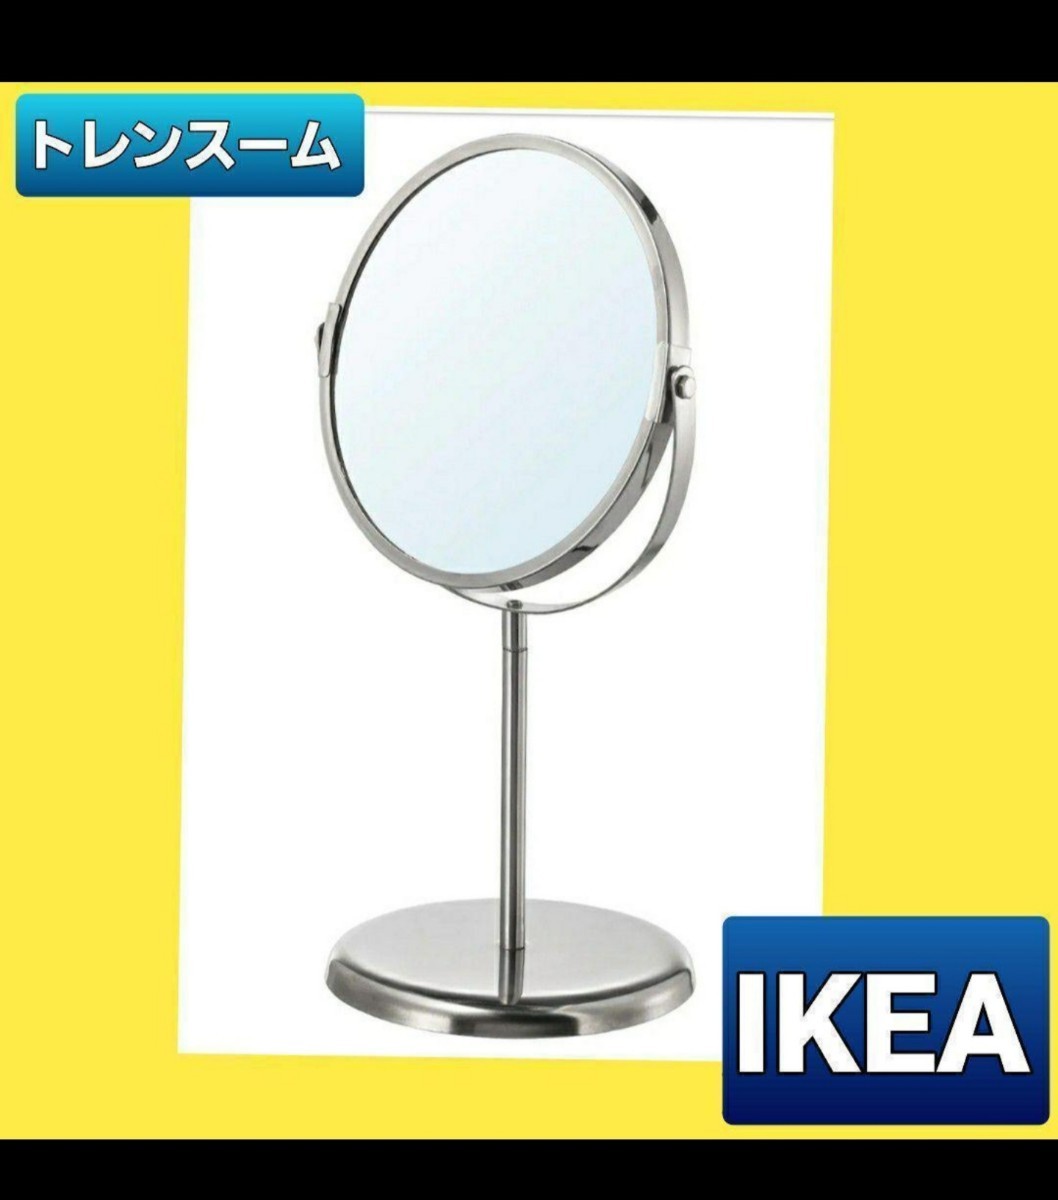 PayPayフリマ｜新品イケア鏡 すぐ発送出来ます イケア IKEA 鏡TRENSUM 両面ミラー